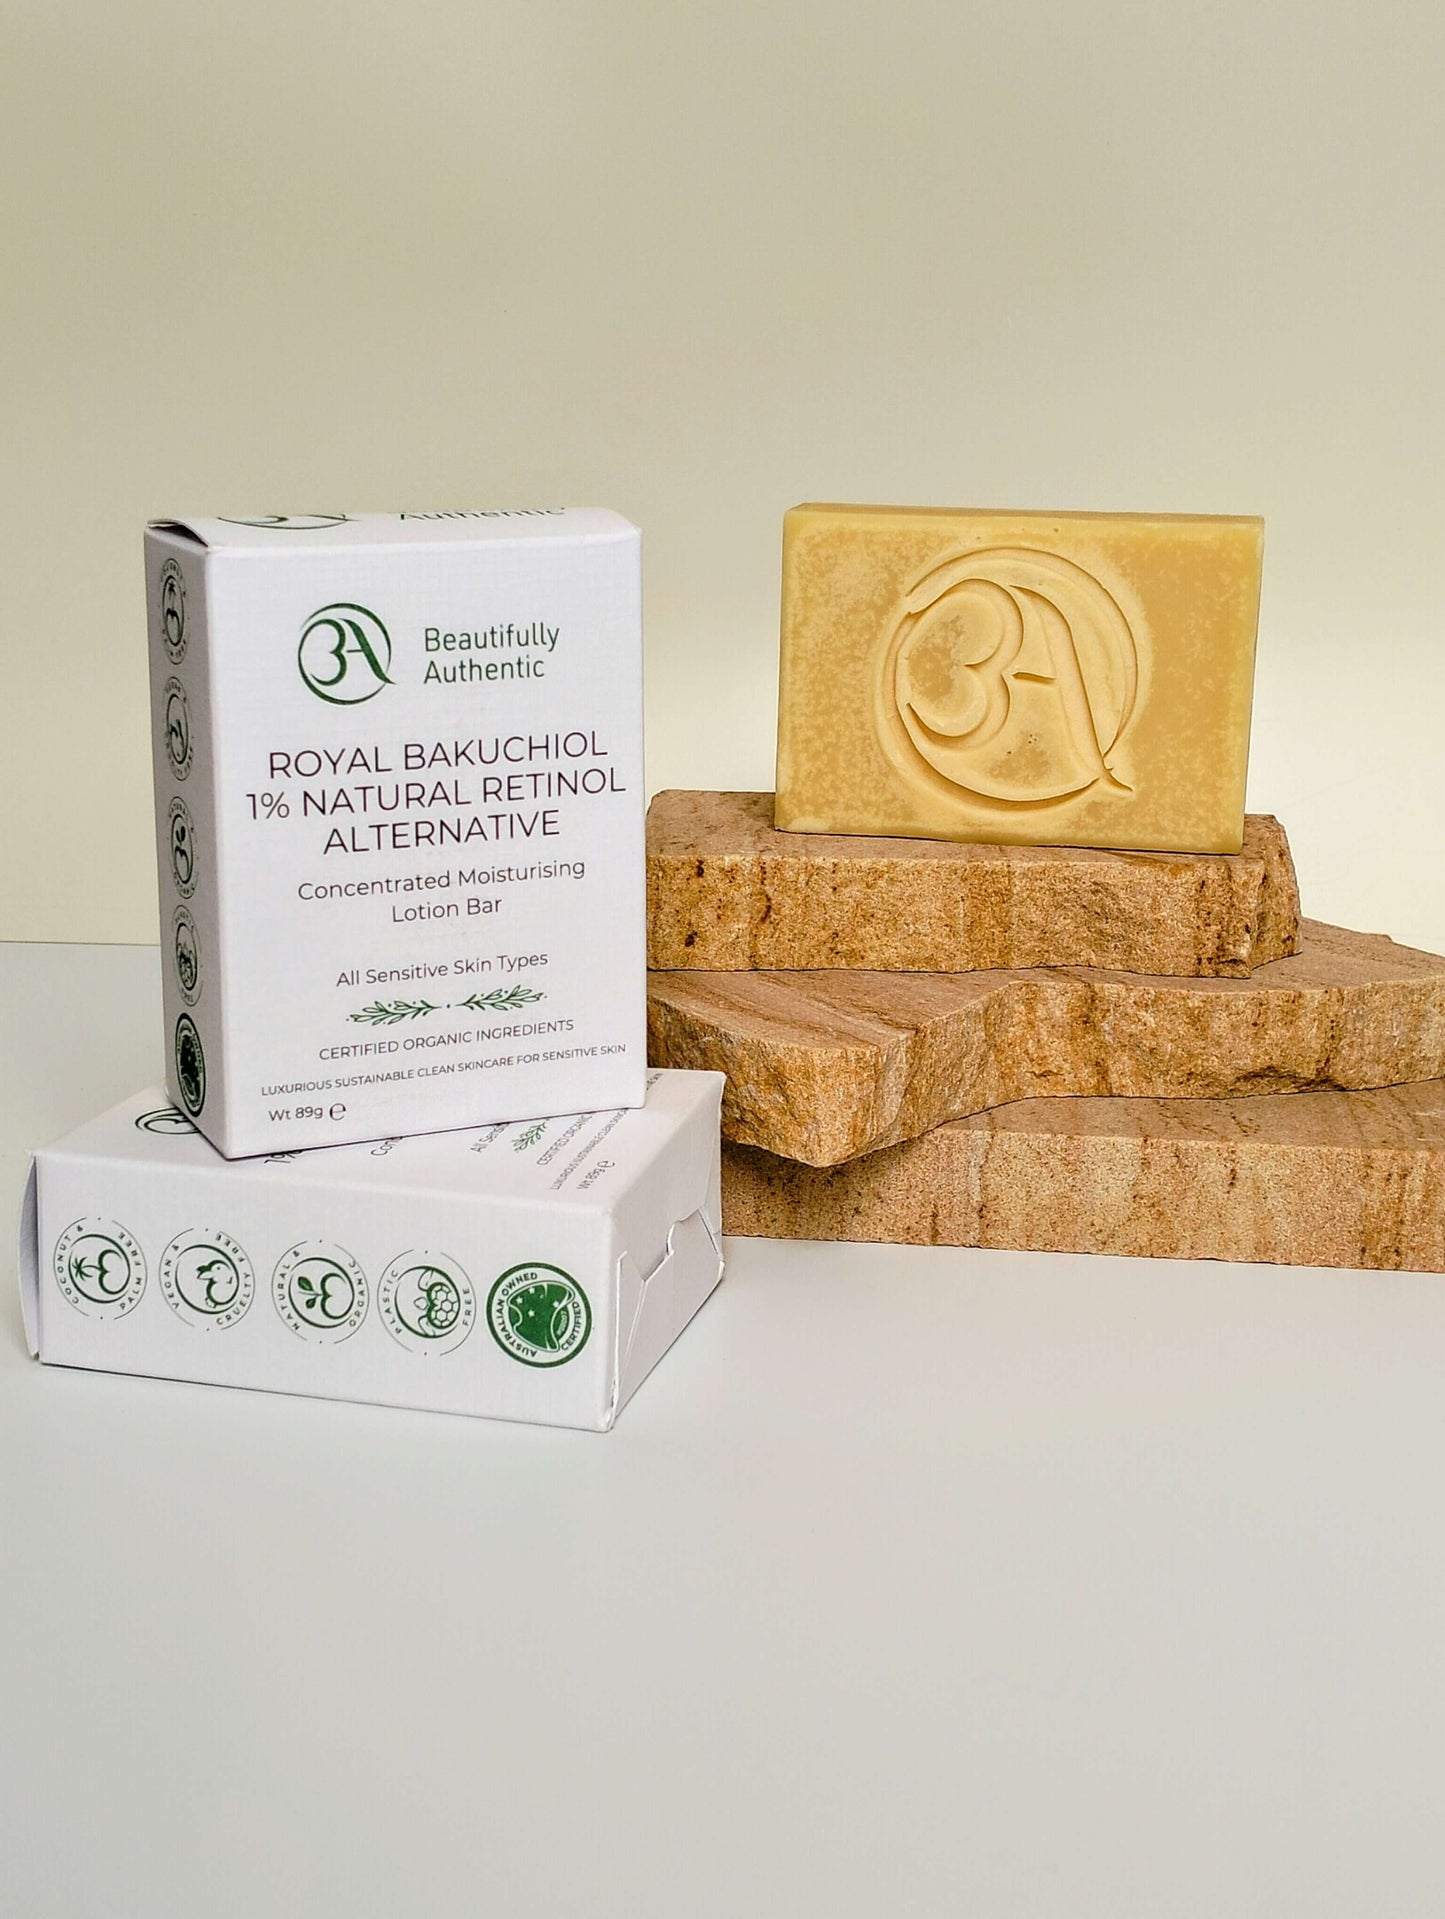 Royal Bakuchiol 1% Natural Retinol Alternative Concentrated Moisturising Lotion Bar For All Sensitive Skin Types